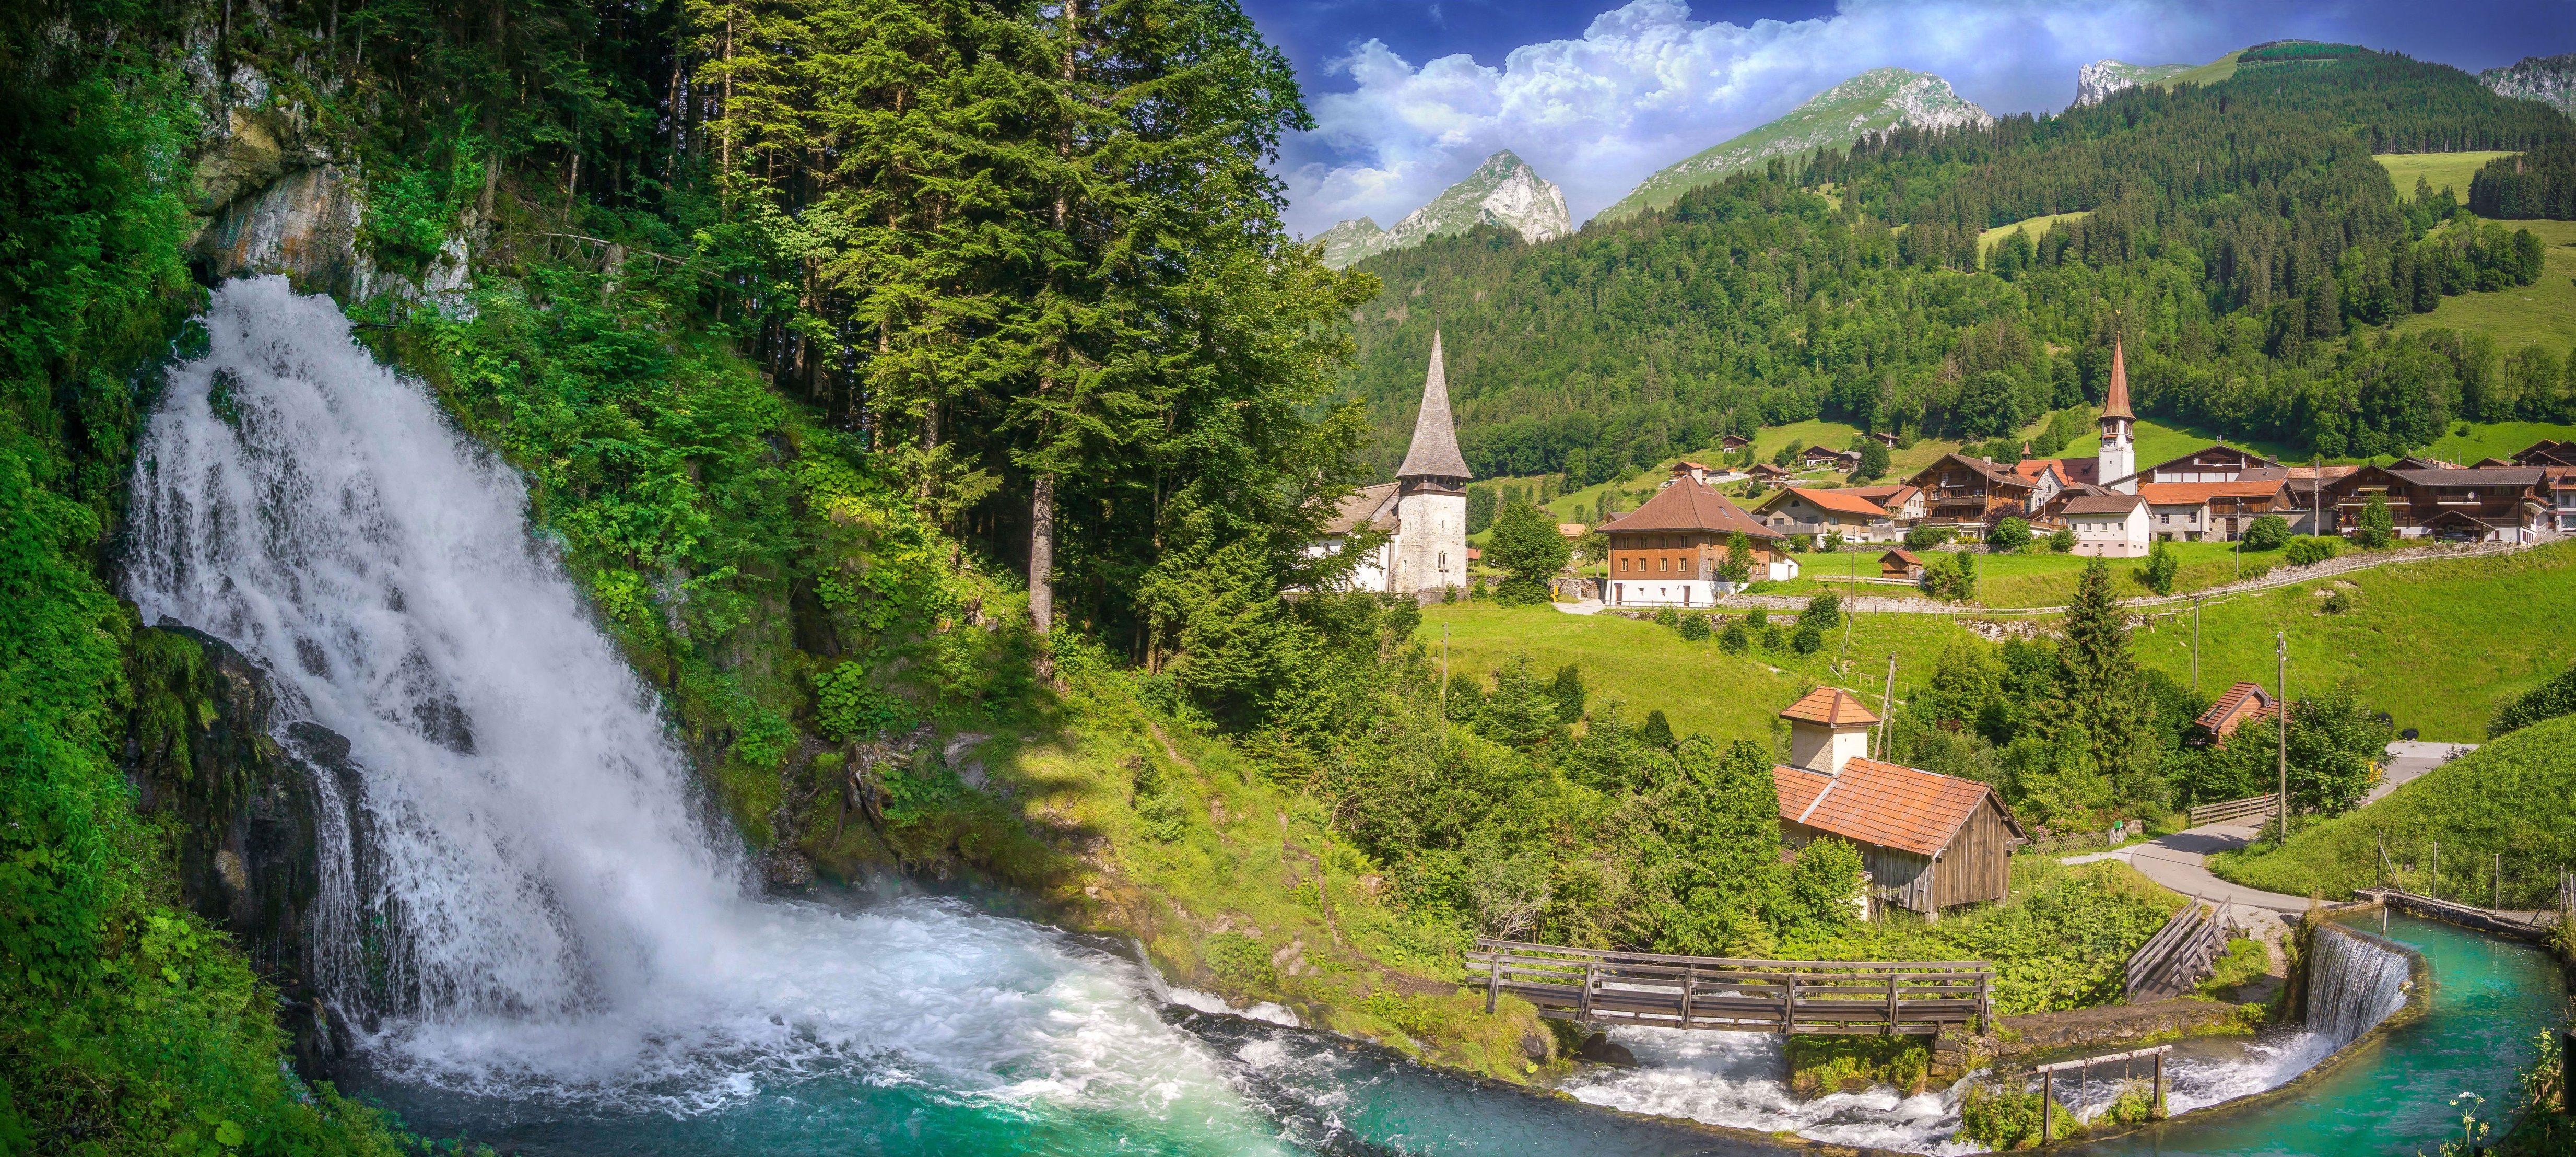 General 4933x2215 nature landscape Switzerland water plants village waterfall mountains